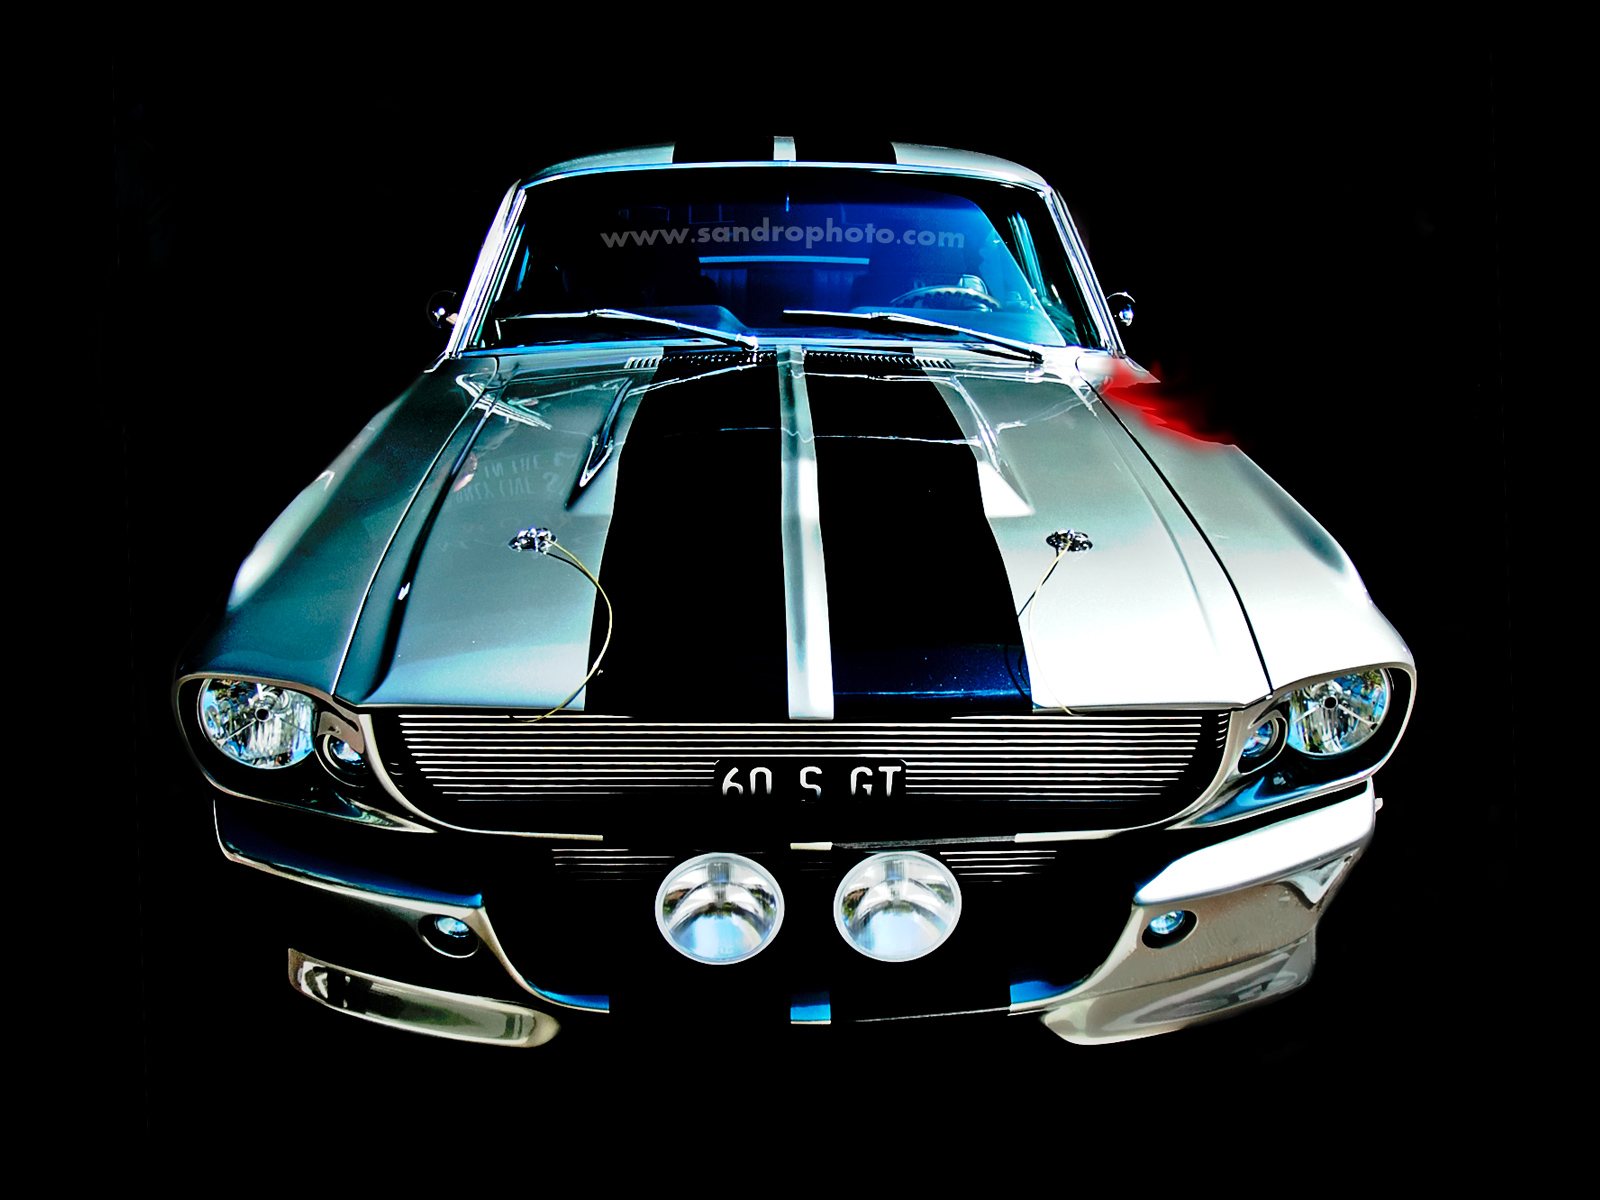 Hd-Car wallpapers: muscle car wallpapers for desktop